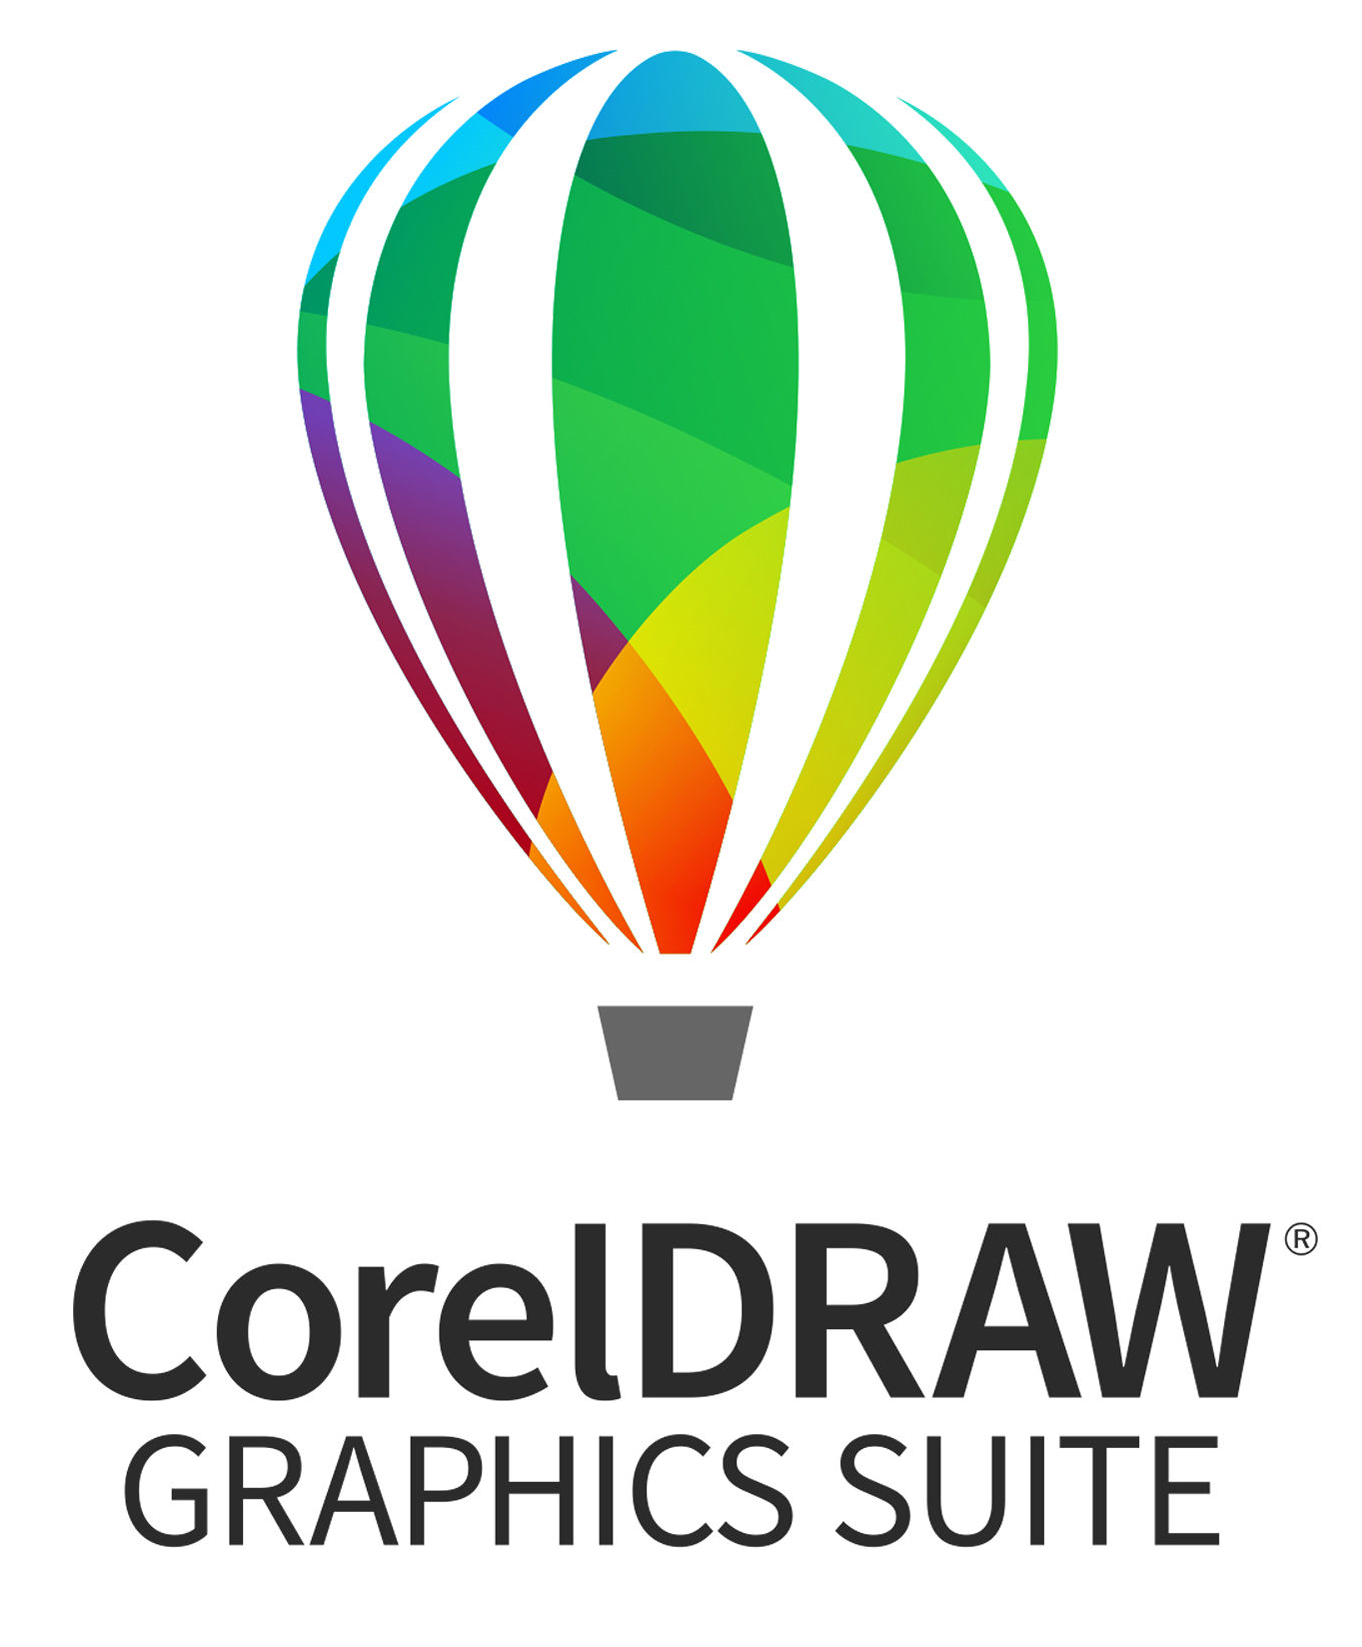 CorelDRAW Graphics Suite 2022 v24.2.0.444 | Cracked Full Version